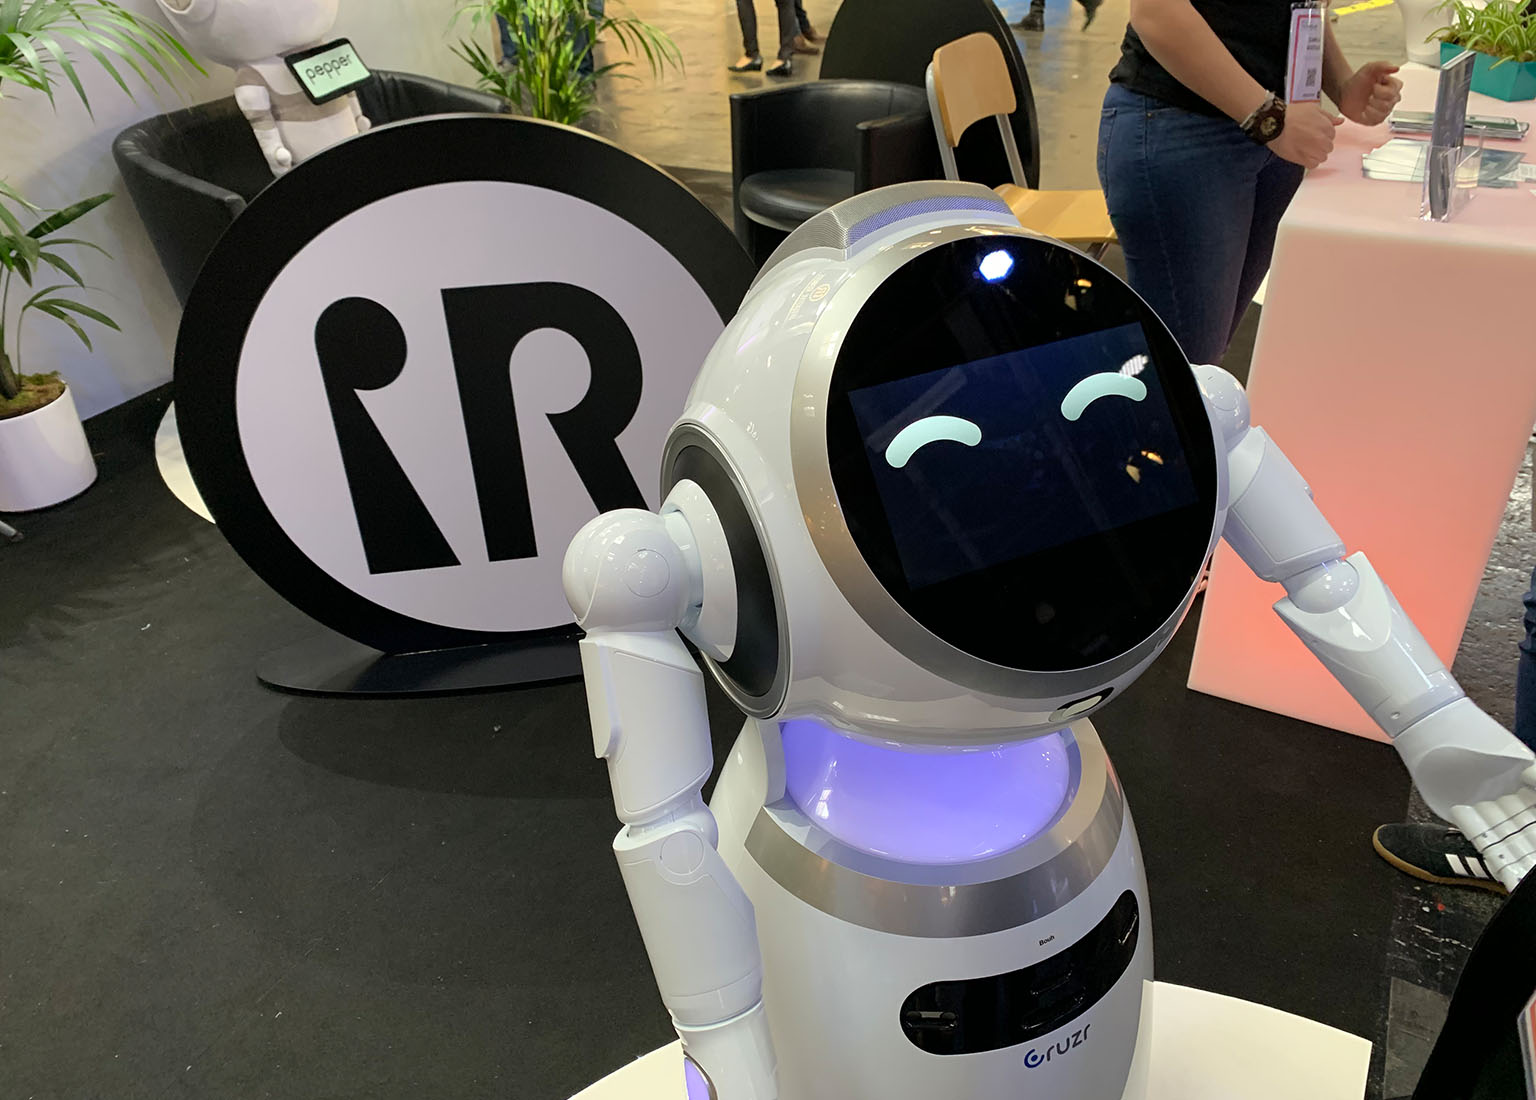 cruzr robot vivatech paris 2019 ubtech